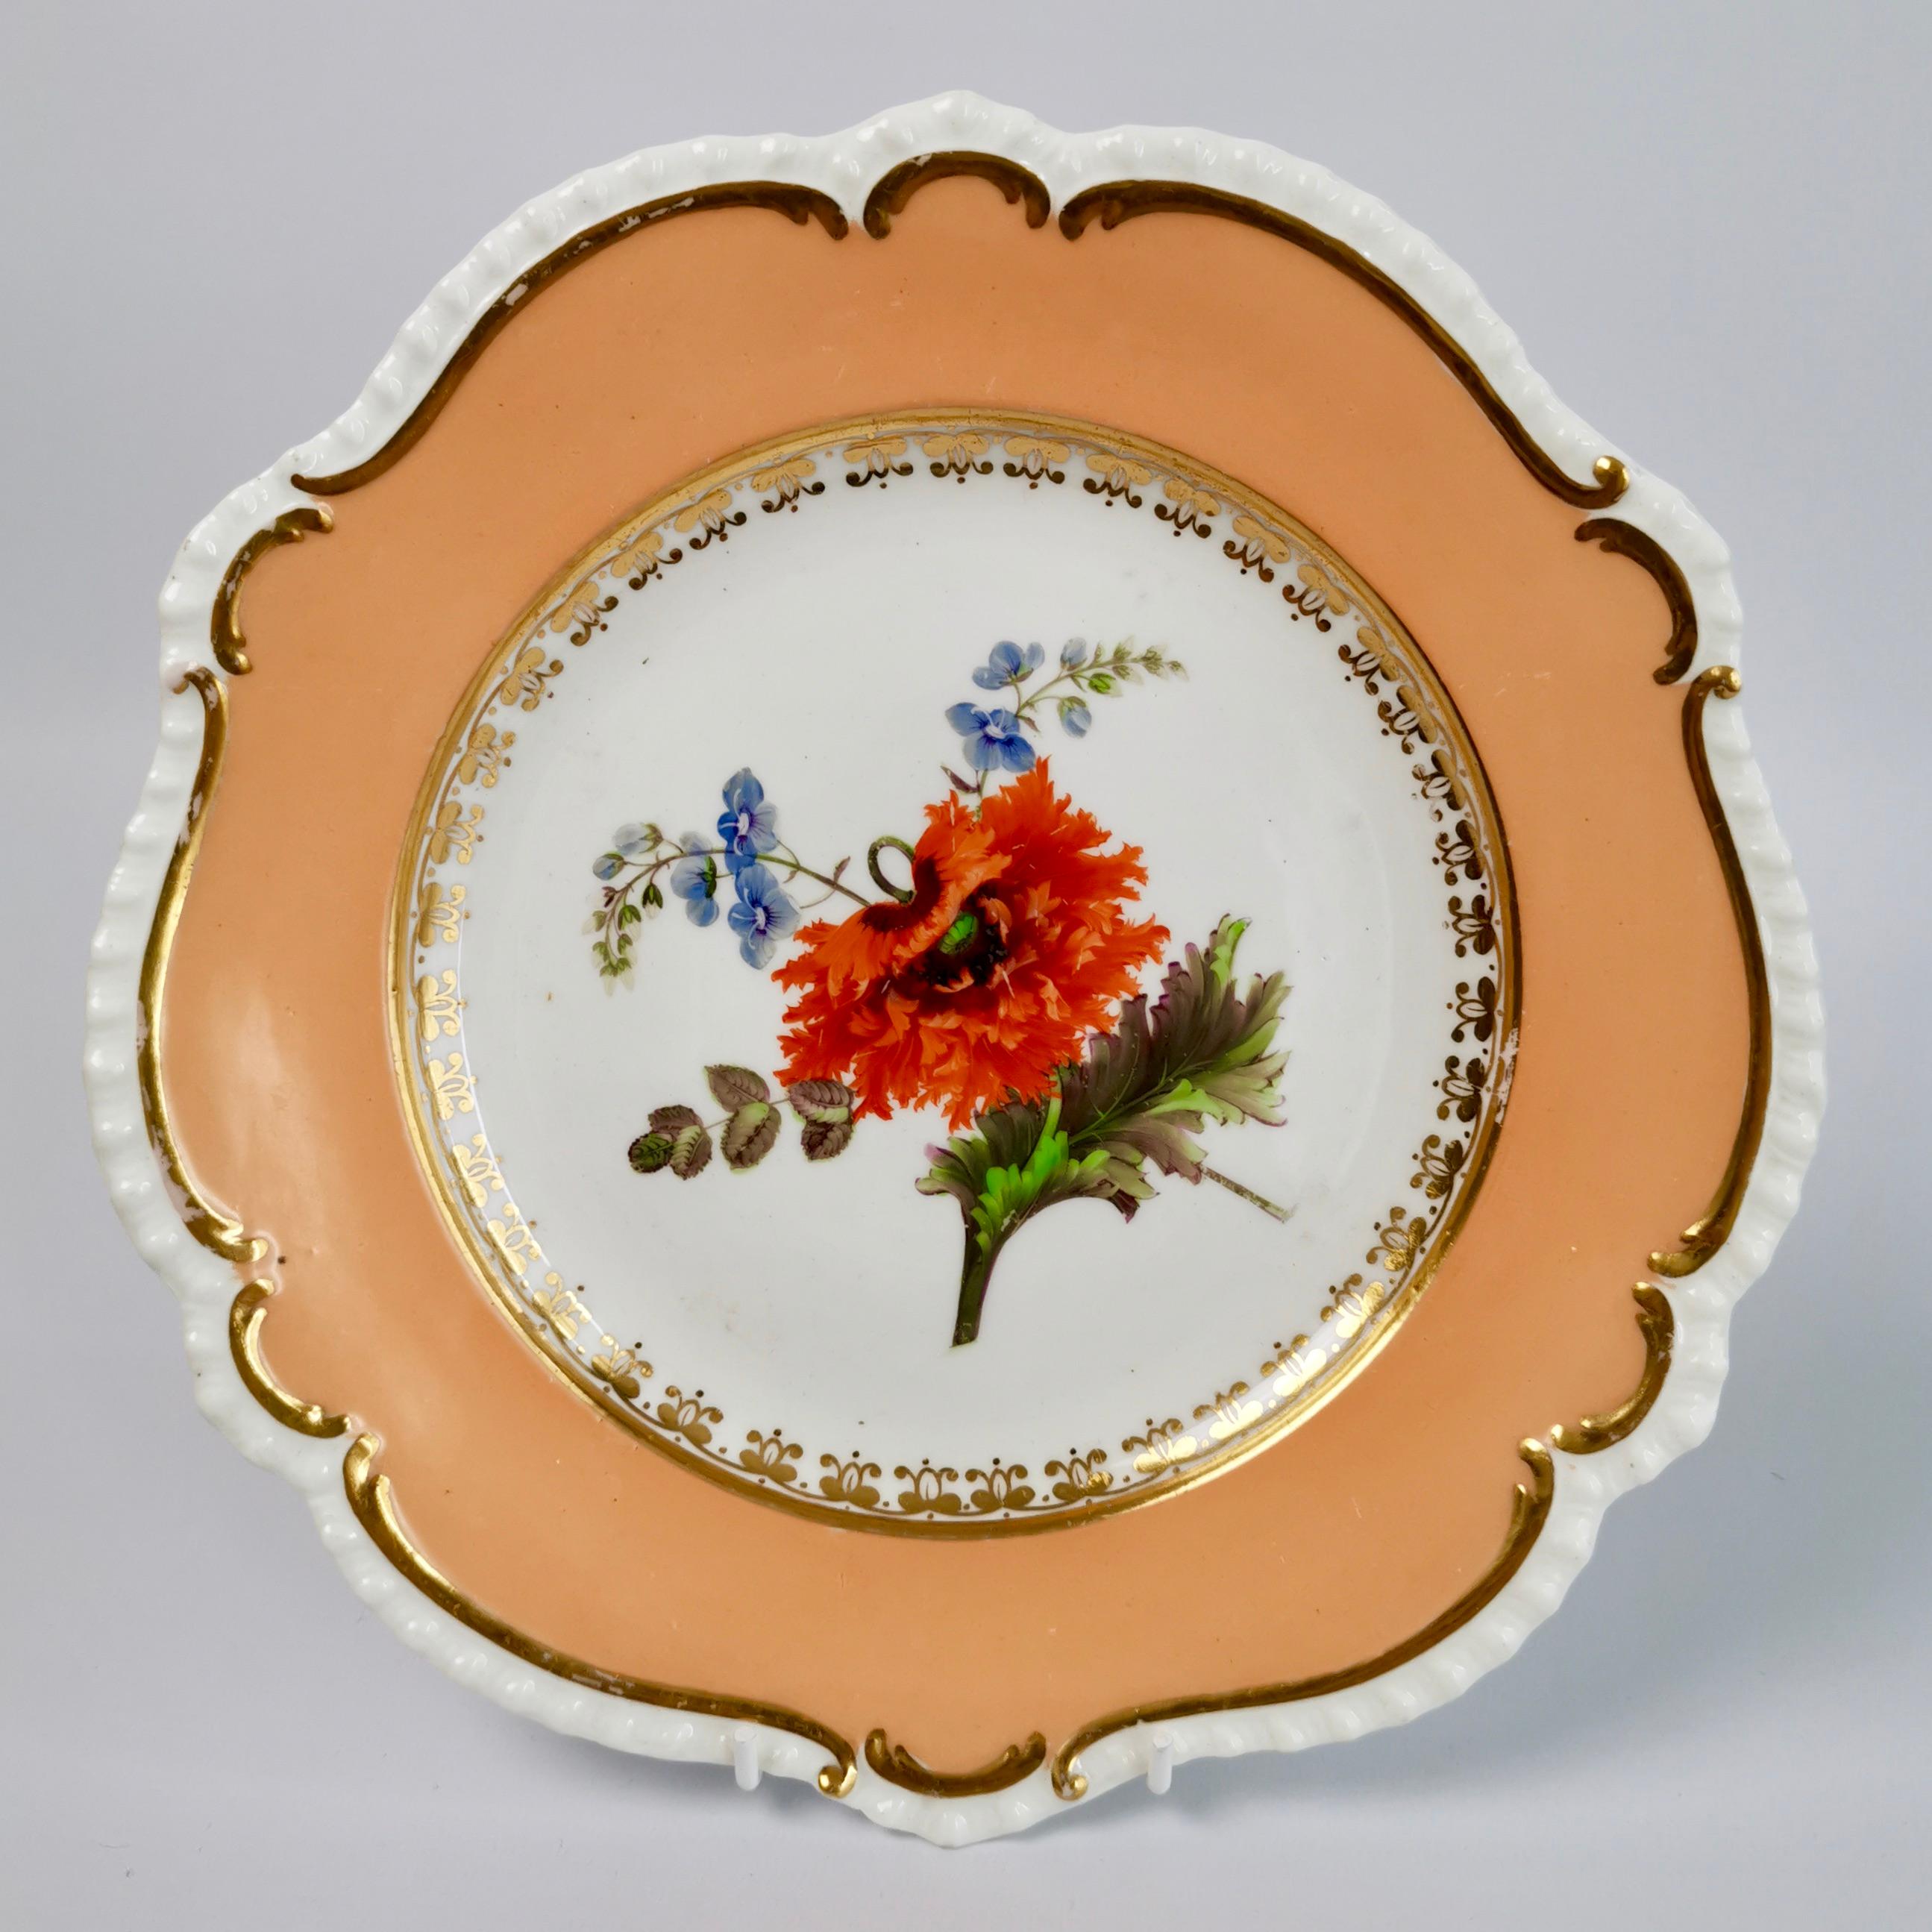 Early 19th Century Coalport Porcelain Dessert Service, Botanical, Peach Ground, Regency 1820-1825